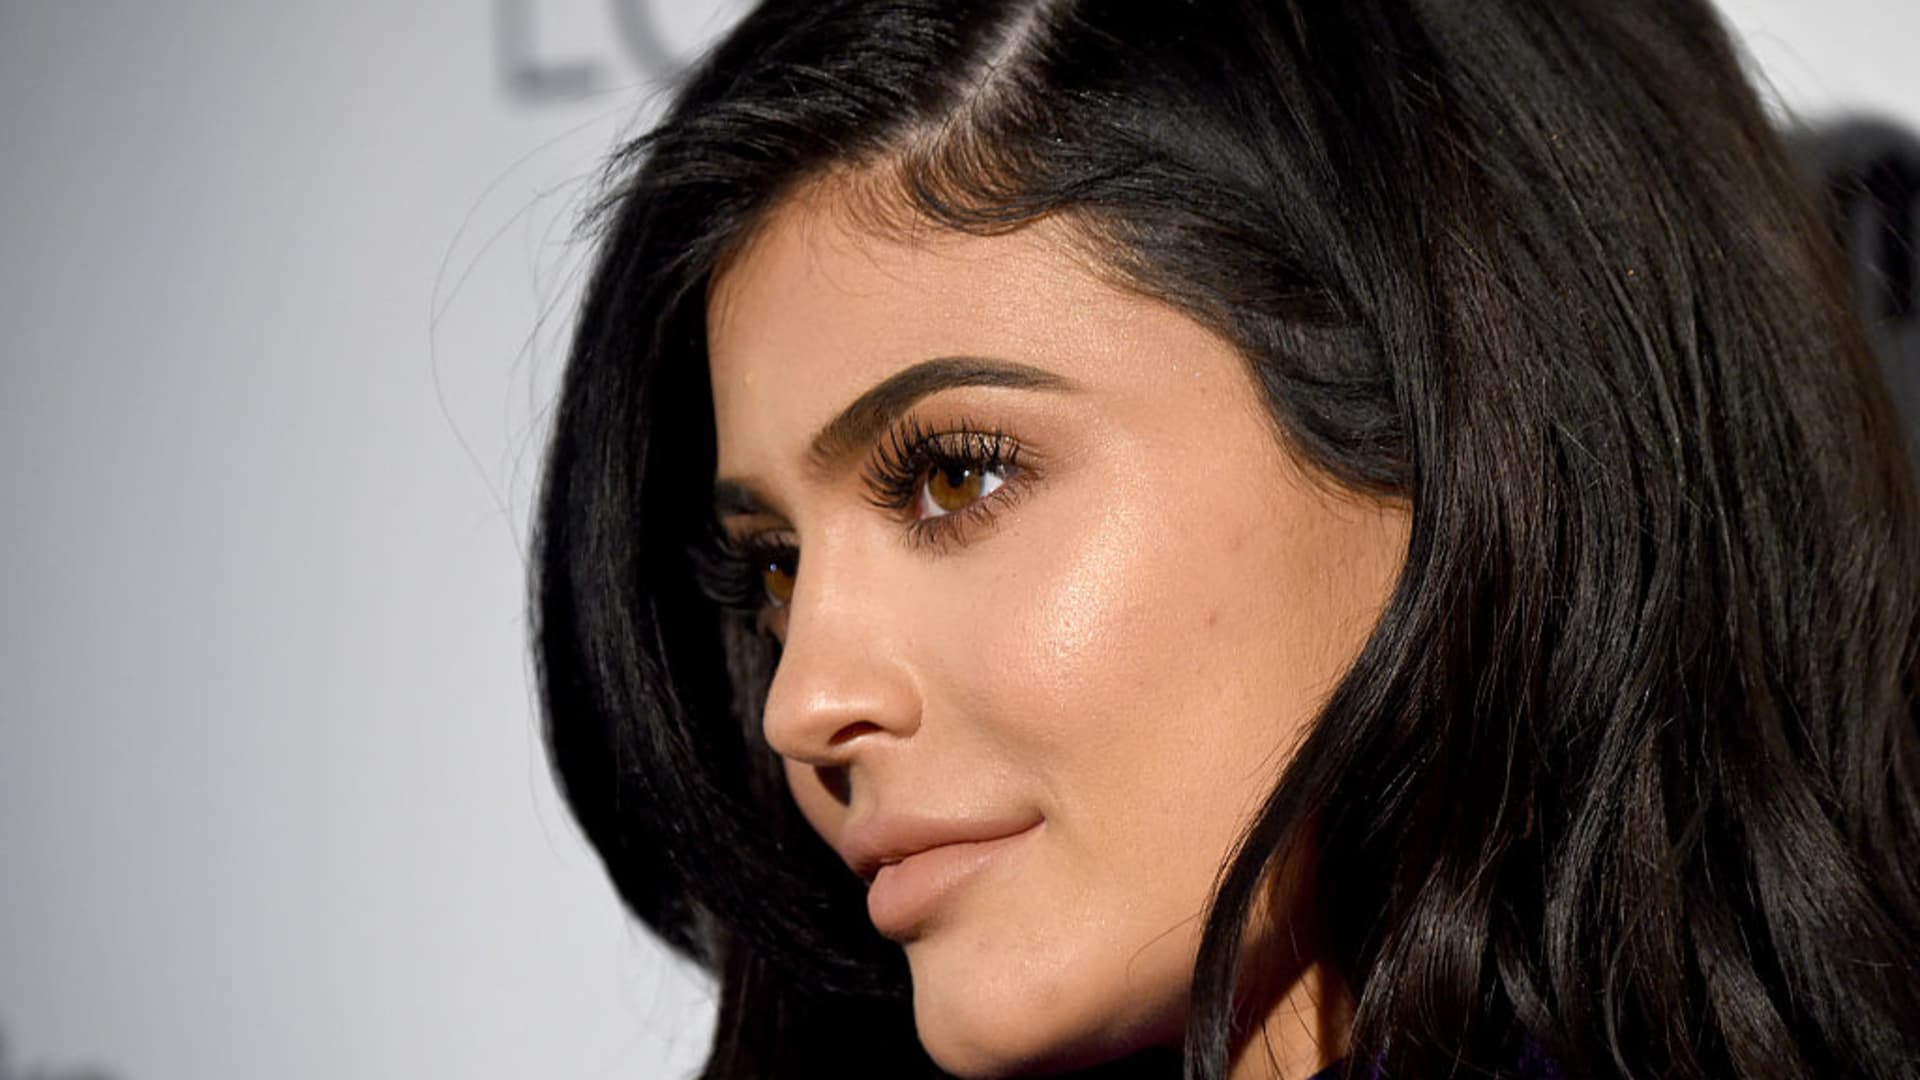 Kylie Jenner can earn $1M per Instagram post